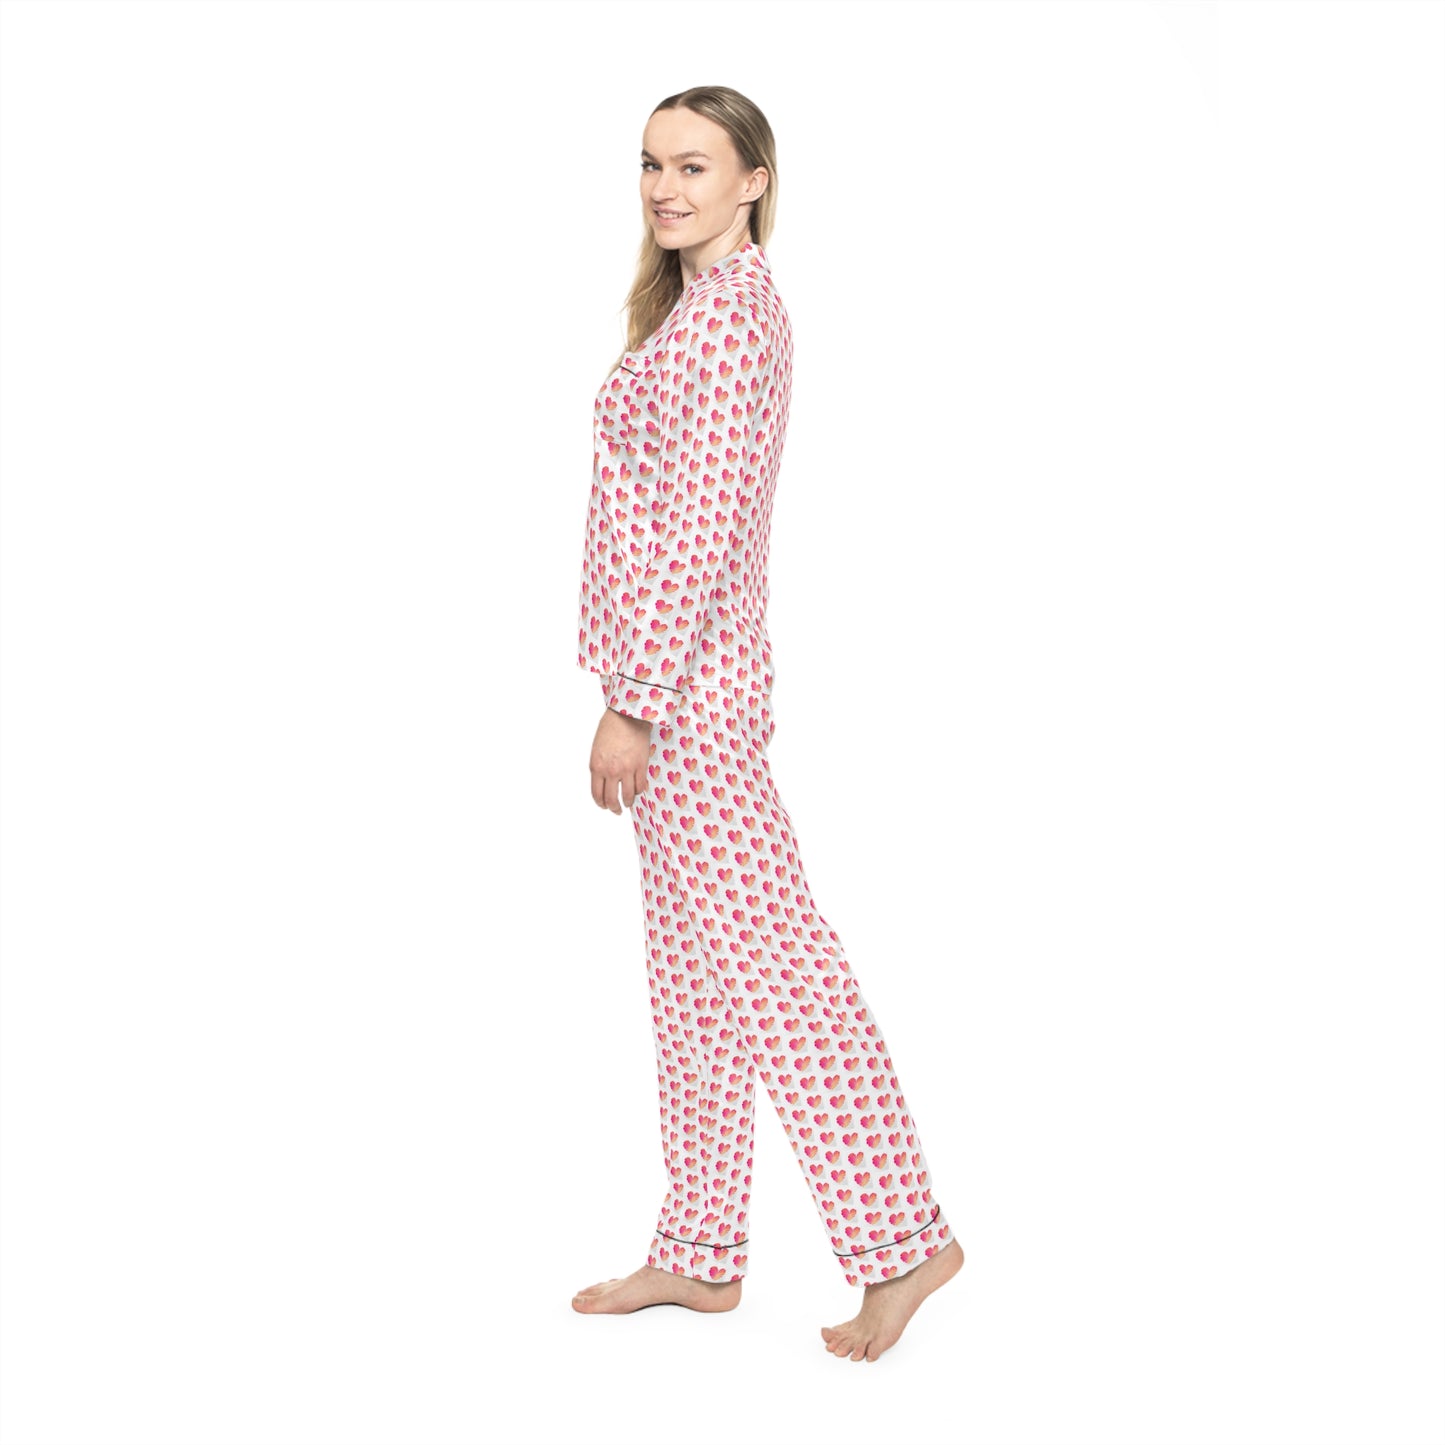 Women's Satin Pajamas with hearts